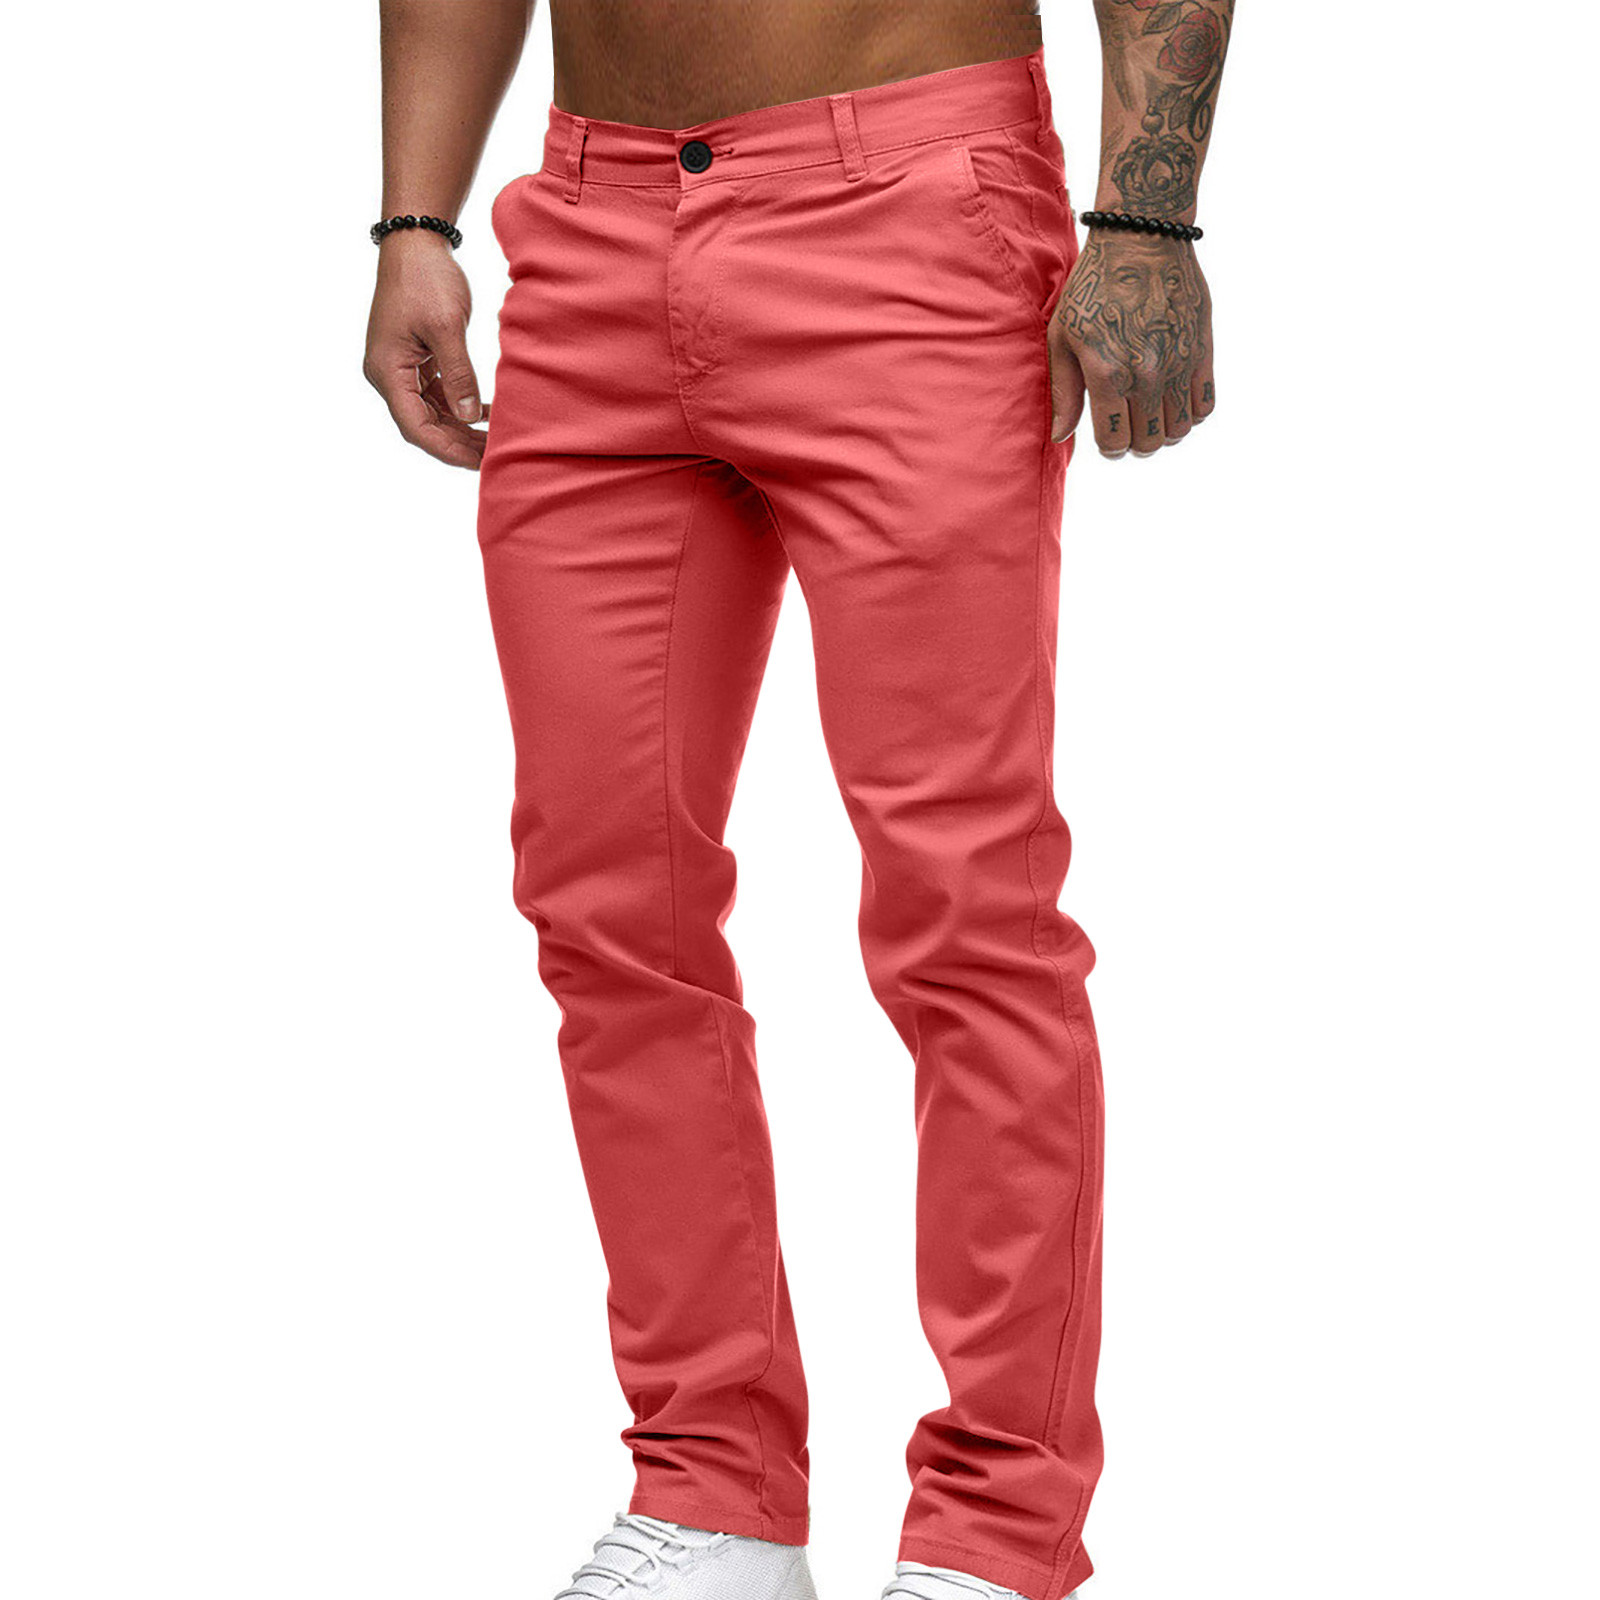 DeHolifer Mens Casual Chinos Pants Cotton Slacks Elastic Waistband Classic Fit Flat Front Khaki Pant Pink L - image 2 of 5